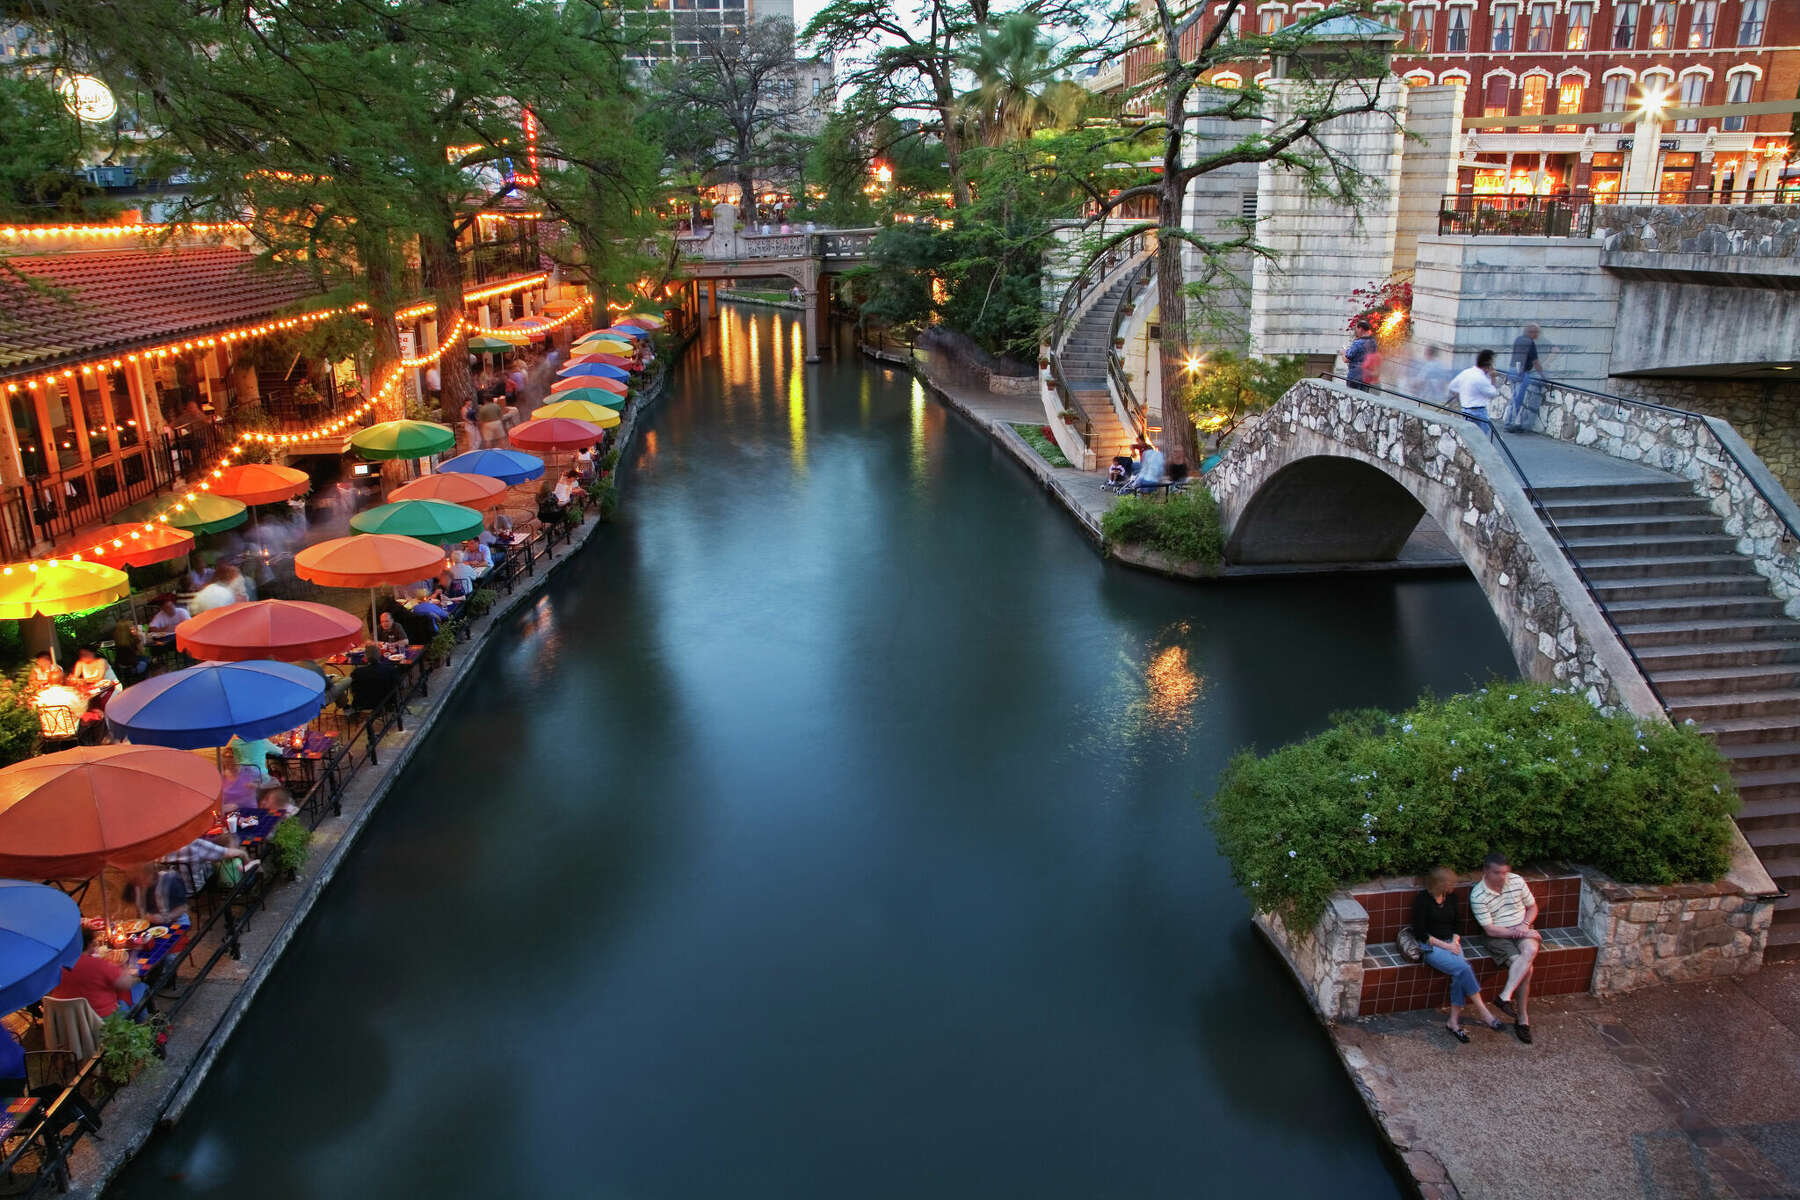 Mokara Hotel & Spa  San Antonio Hotels on the River Walk